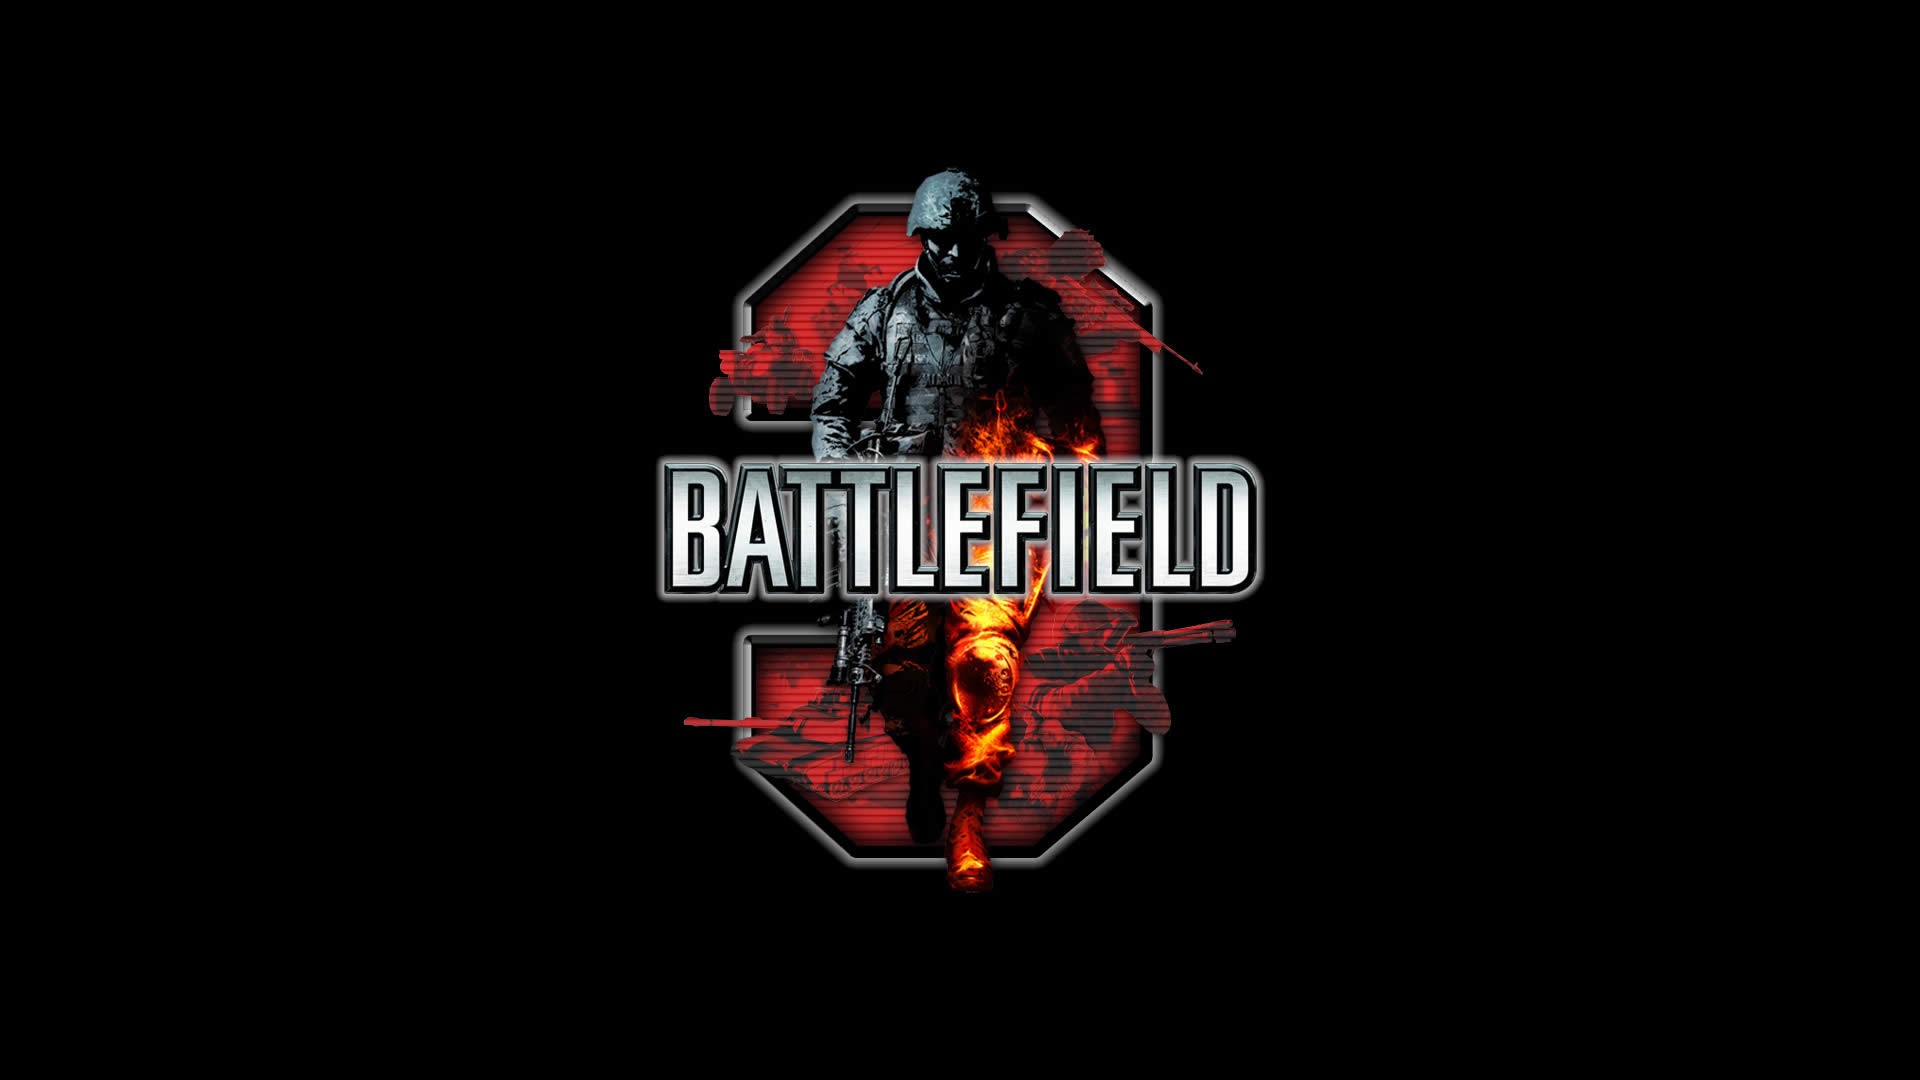 Video Game Battlefield 3 1920x1080